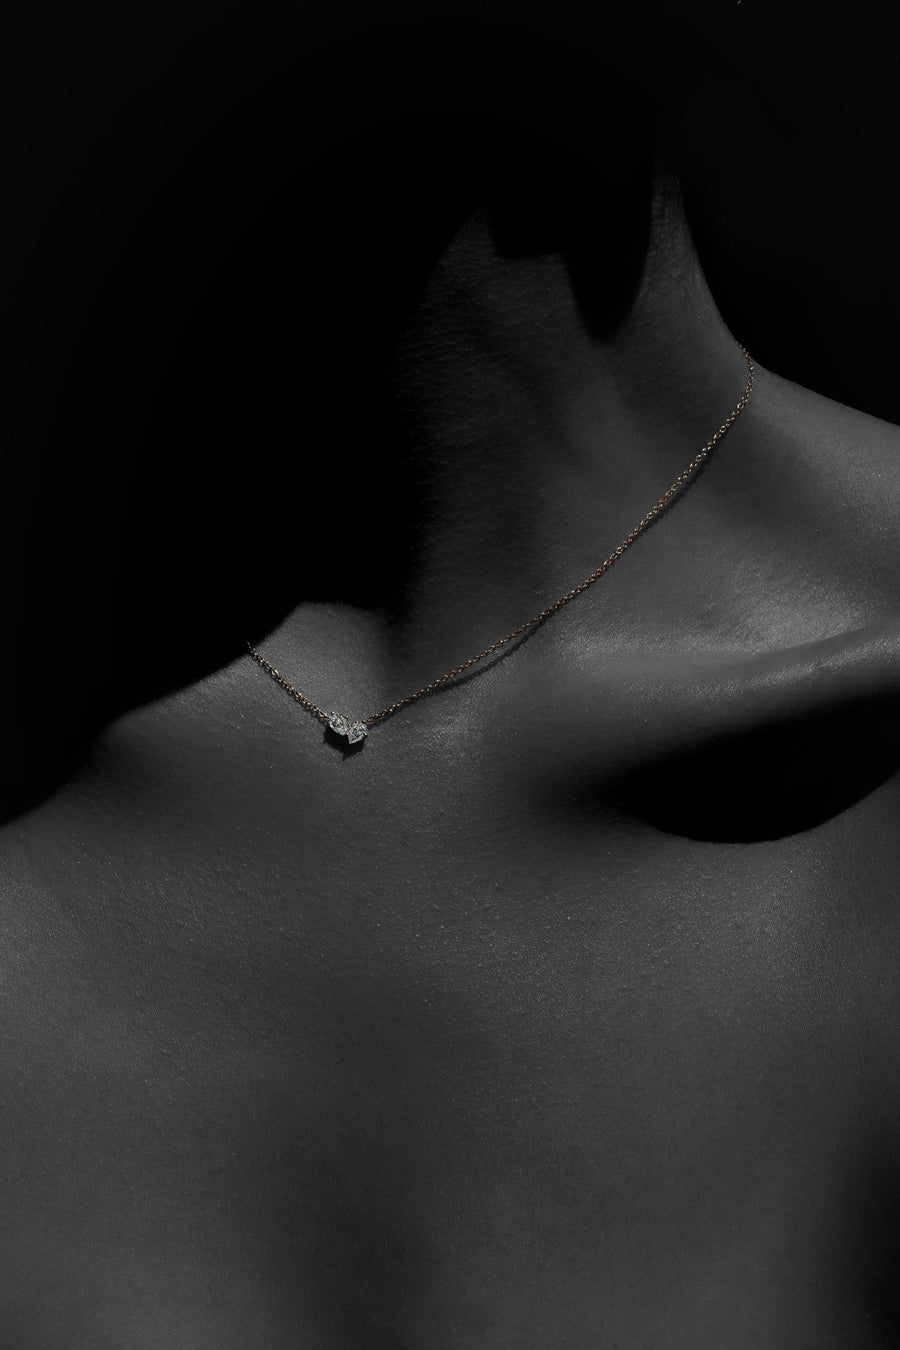 The Other Half Necklace - Eliise Maar Jewellery